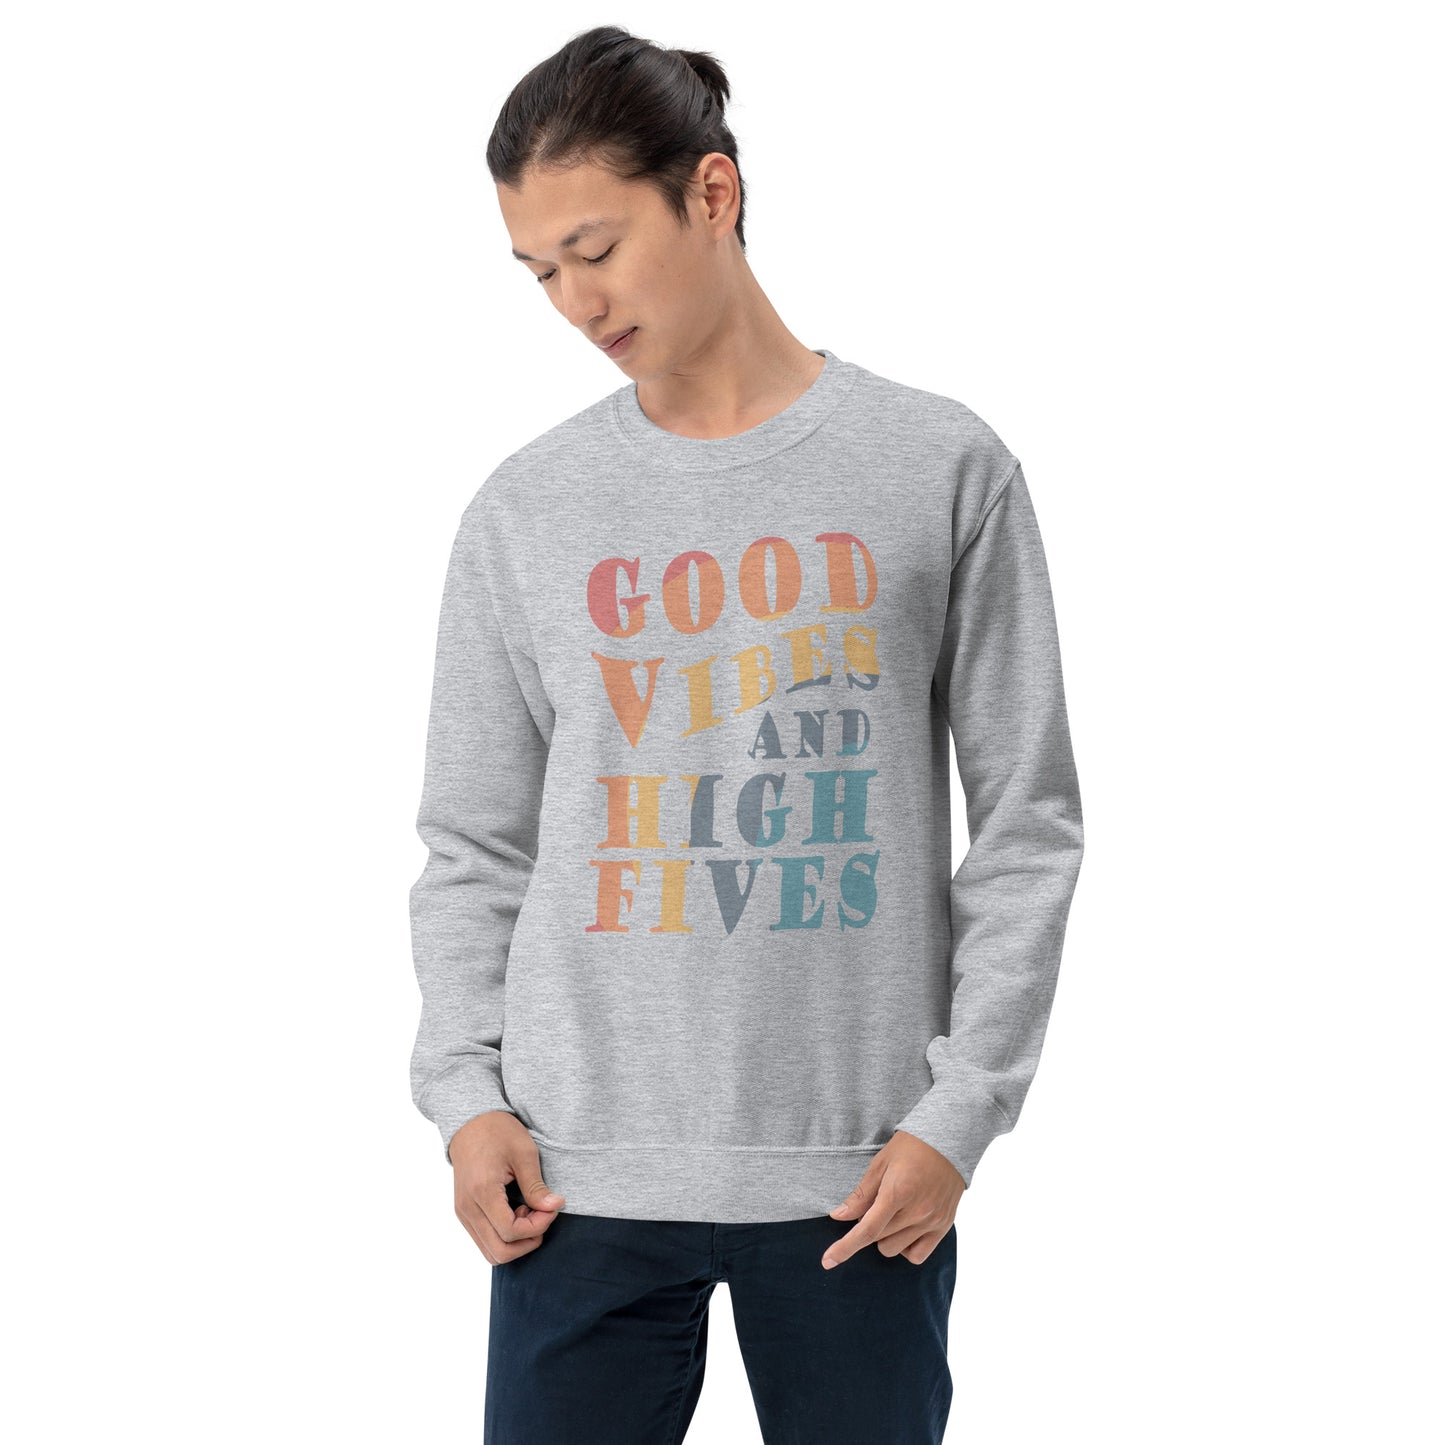 Good Vibes And High Fives Unisex Sweatshirt